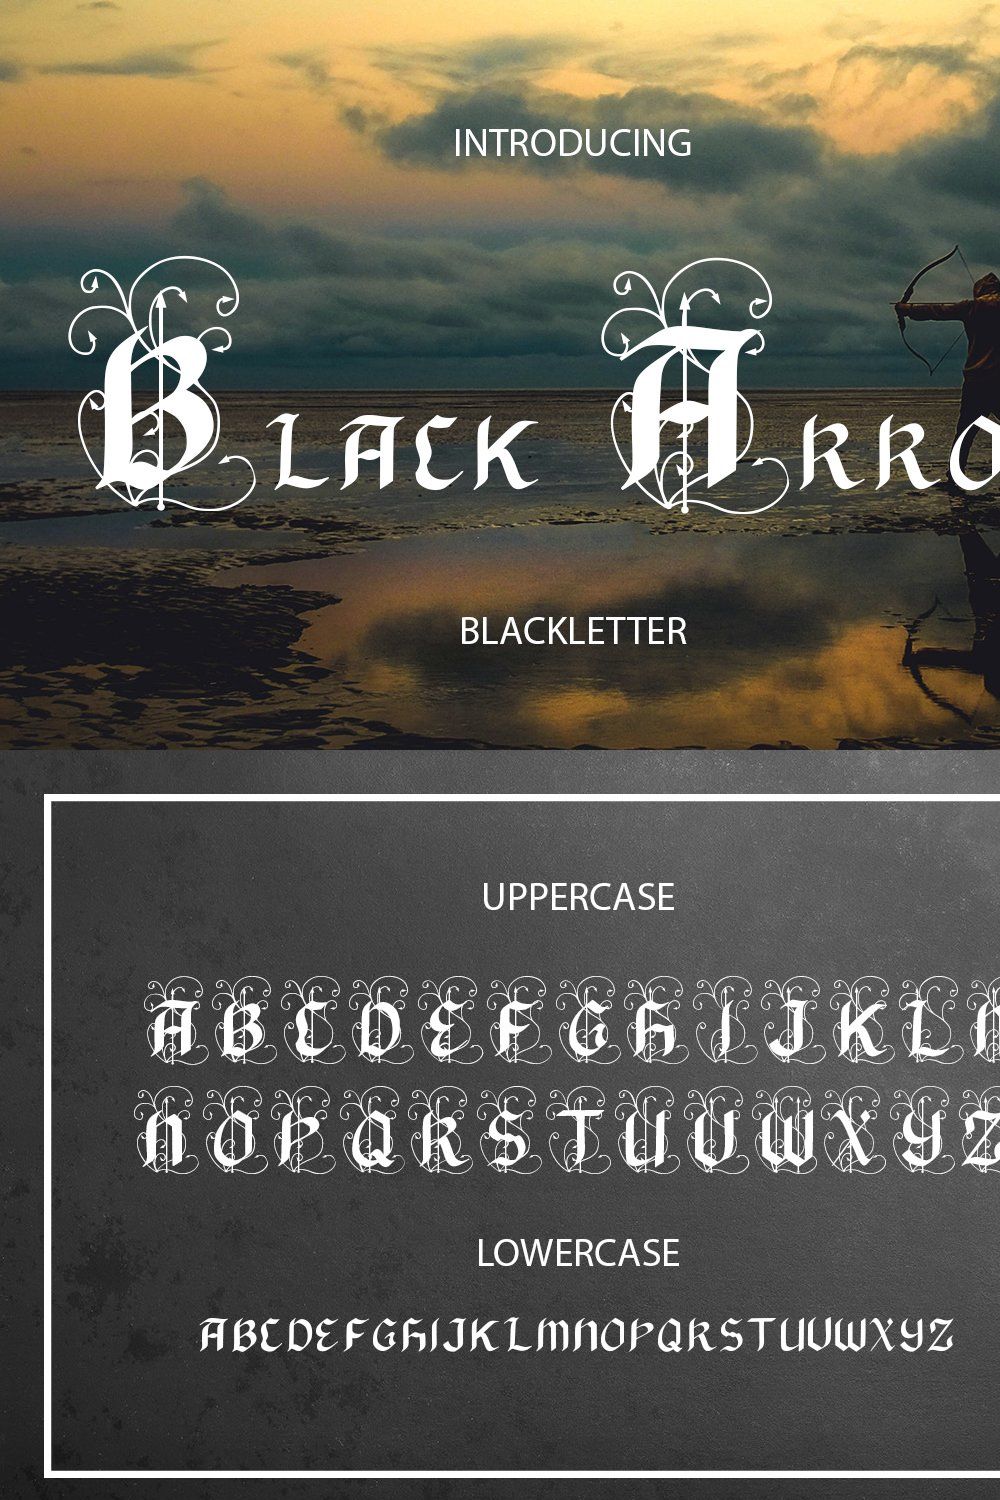 Black Arrow blackletter font pinterest preview image.